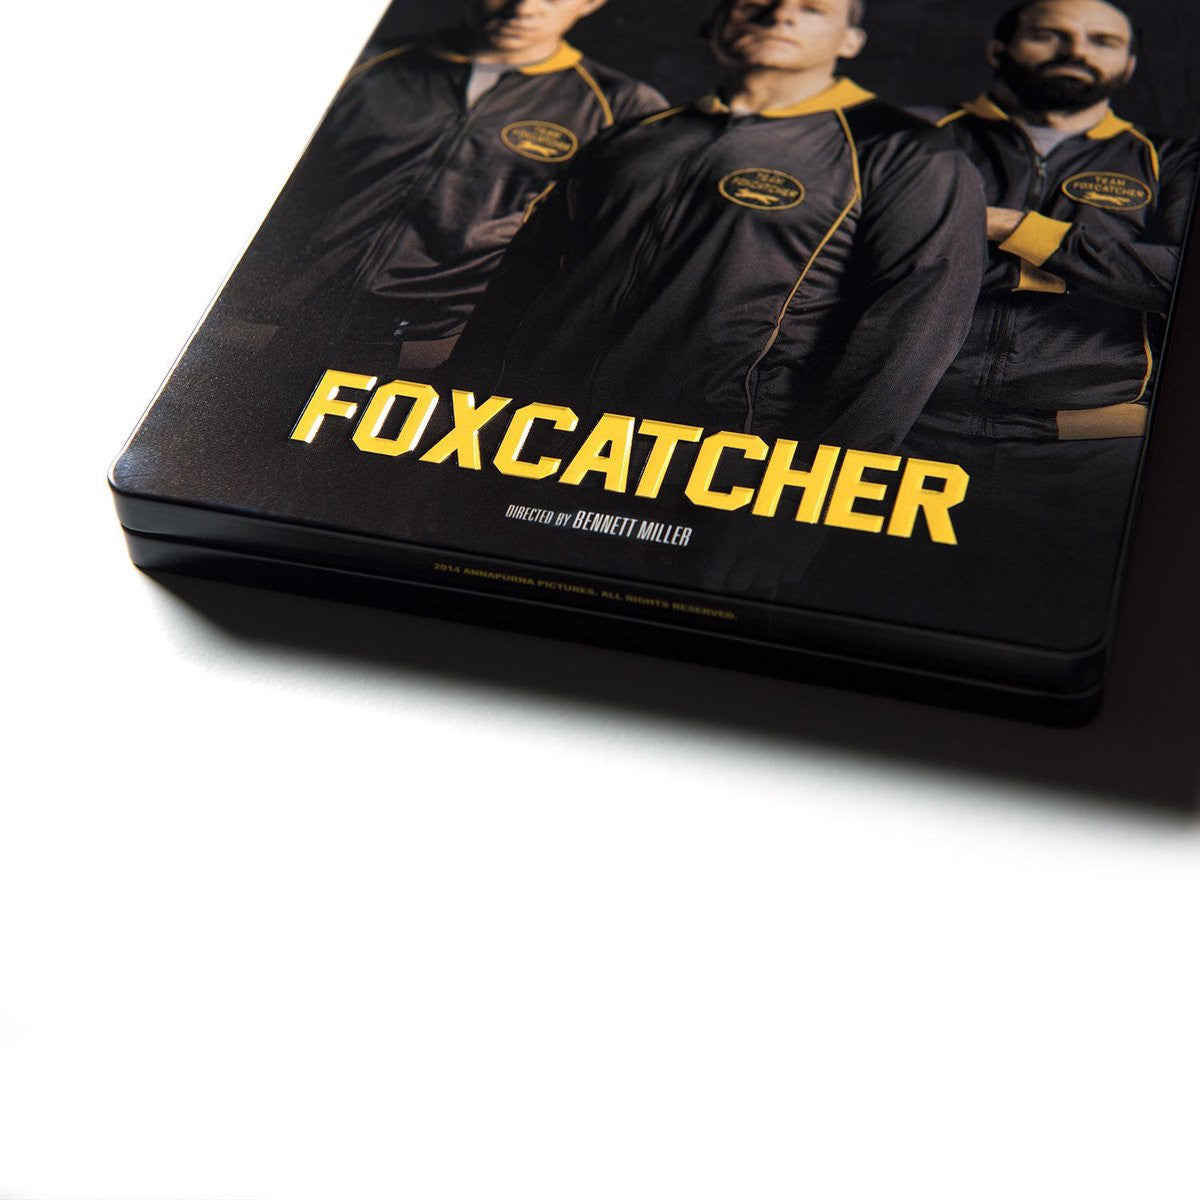 FOXCATCHER Steelbook: Deluxe Box